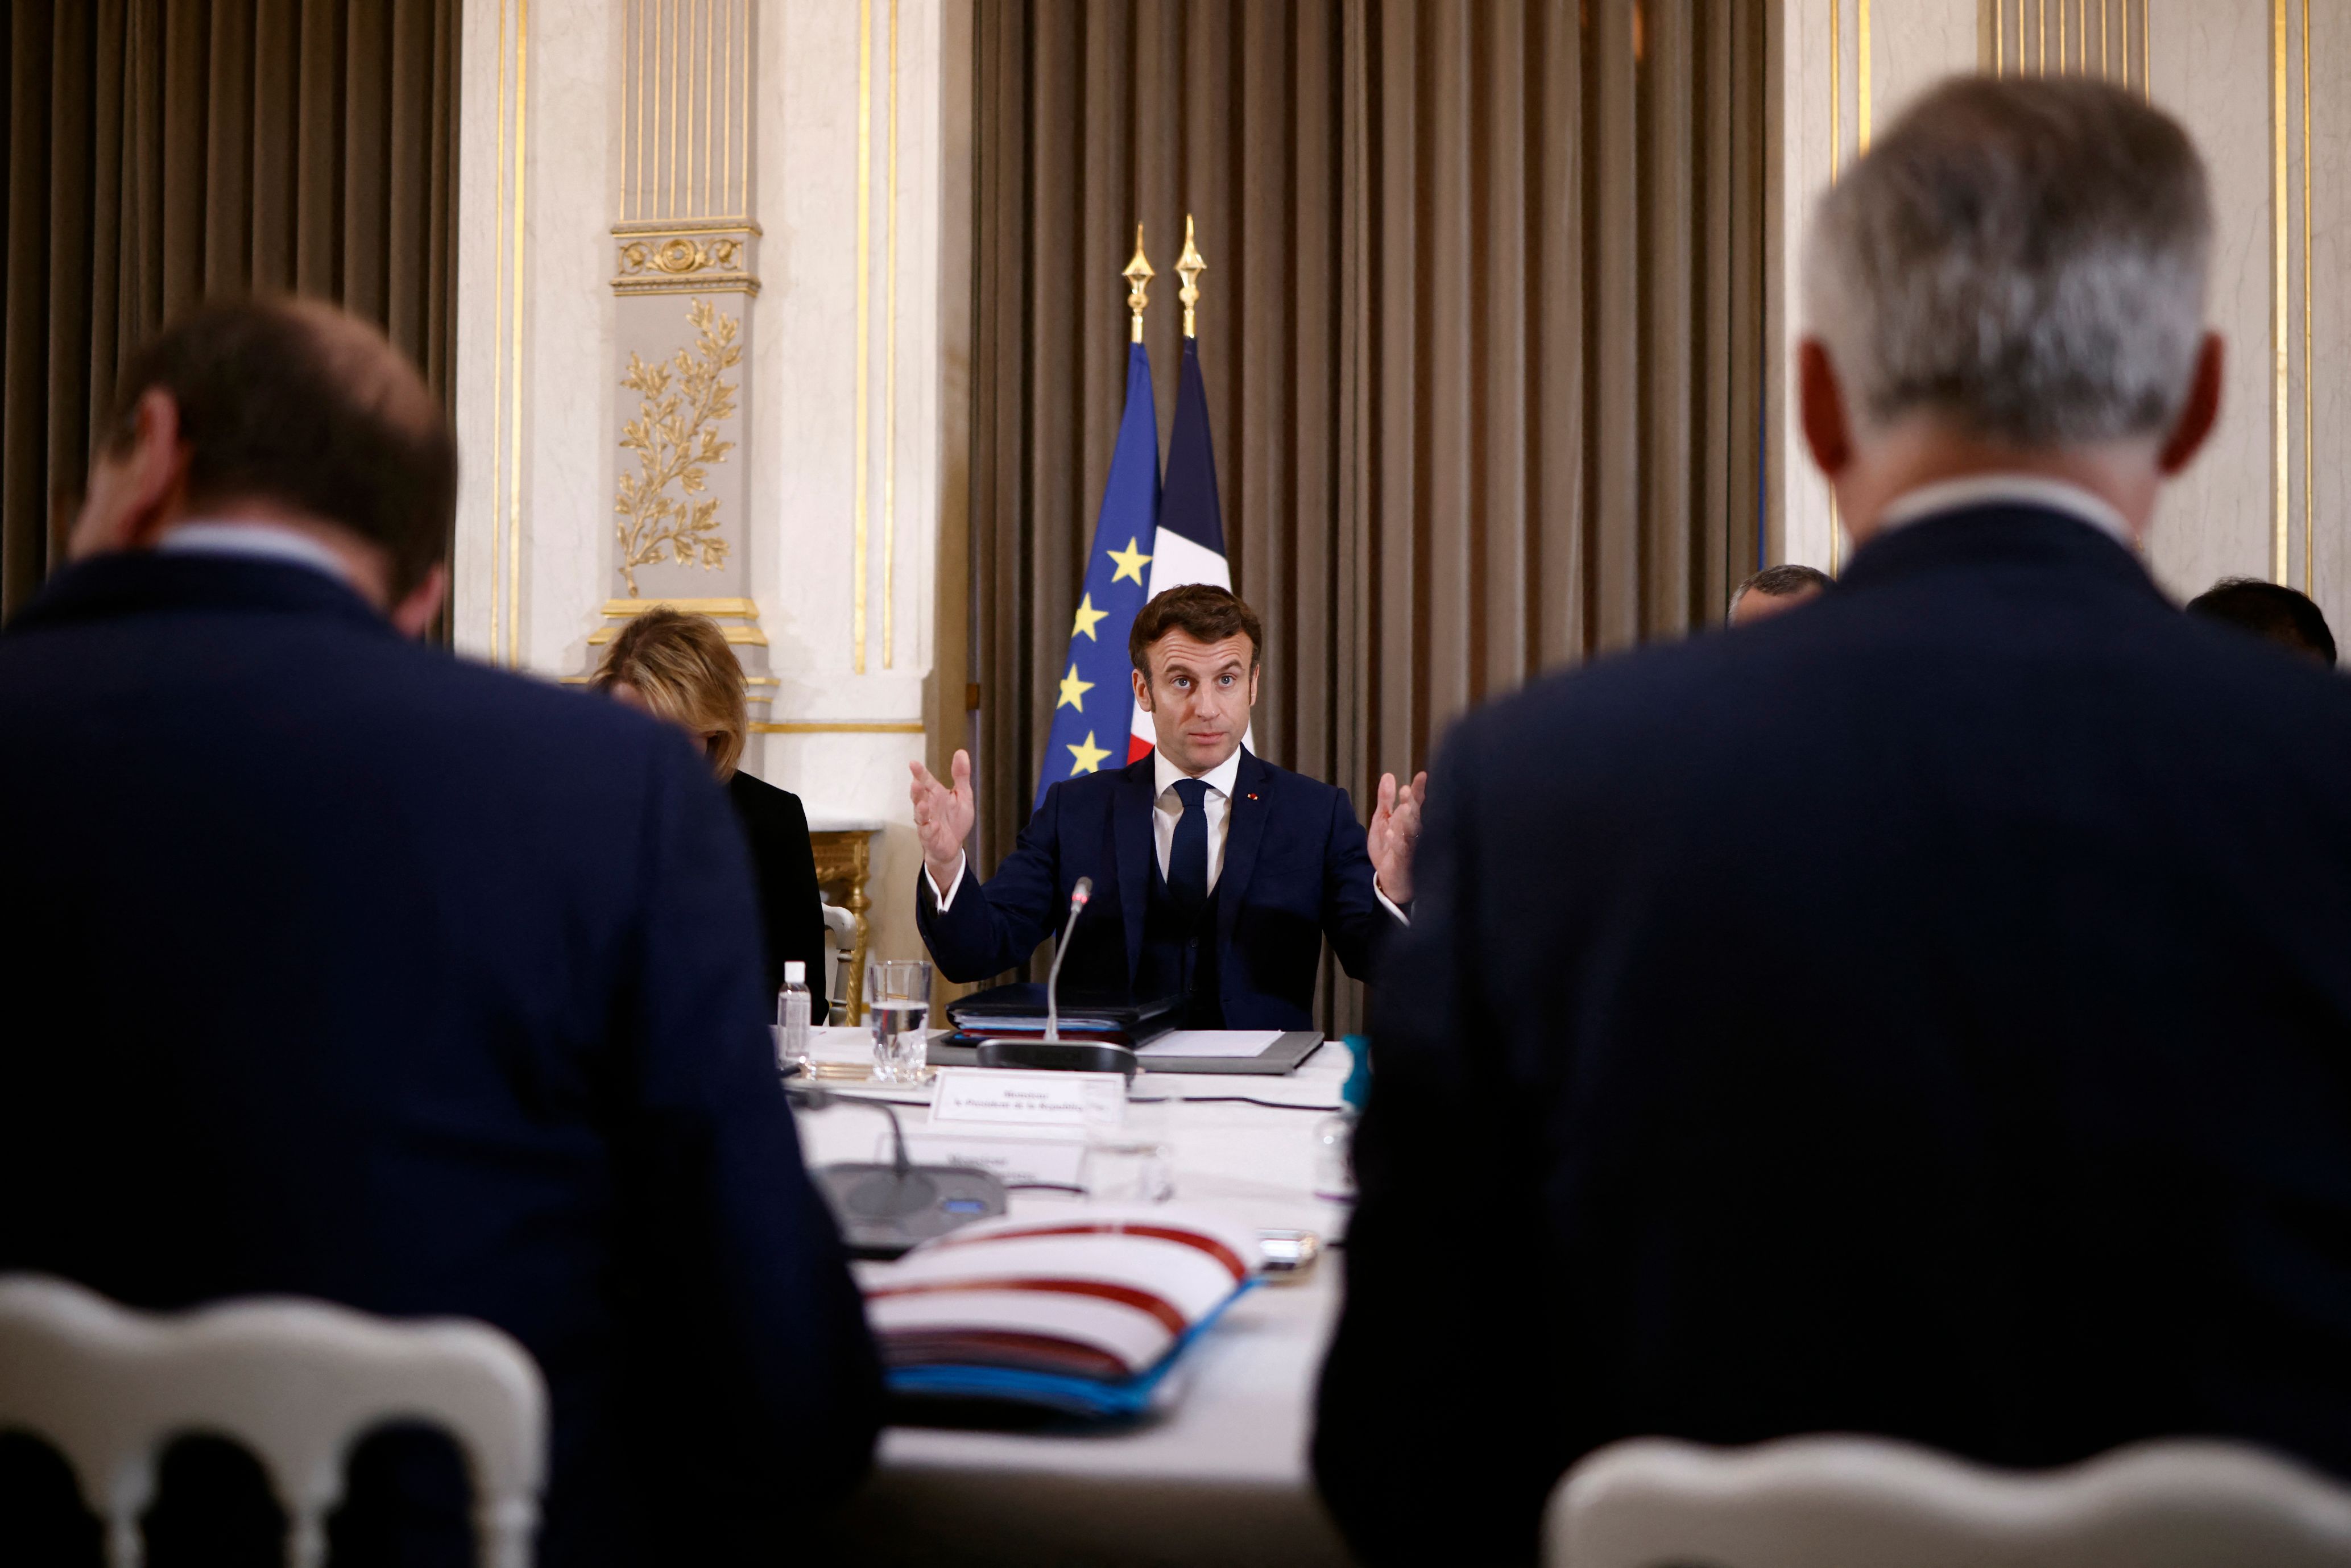 French President Macron talks to Putin and Zelensky separately